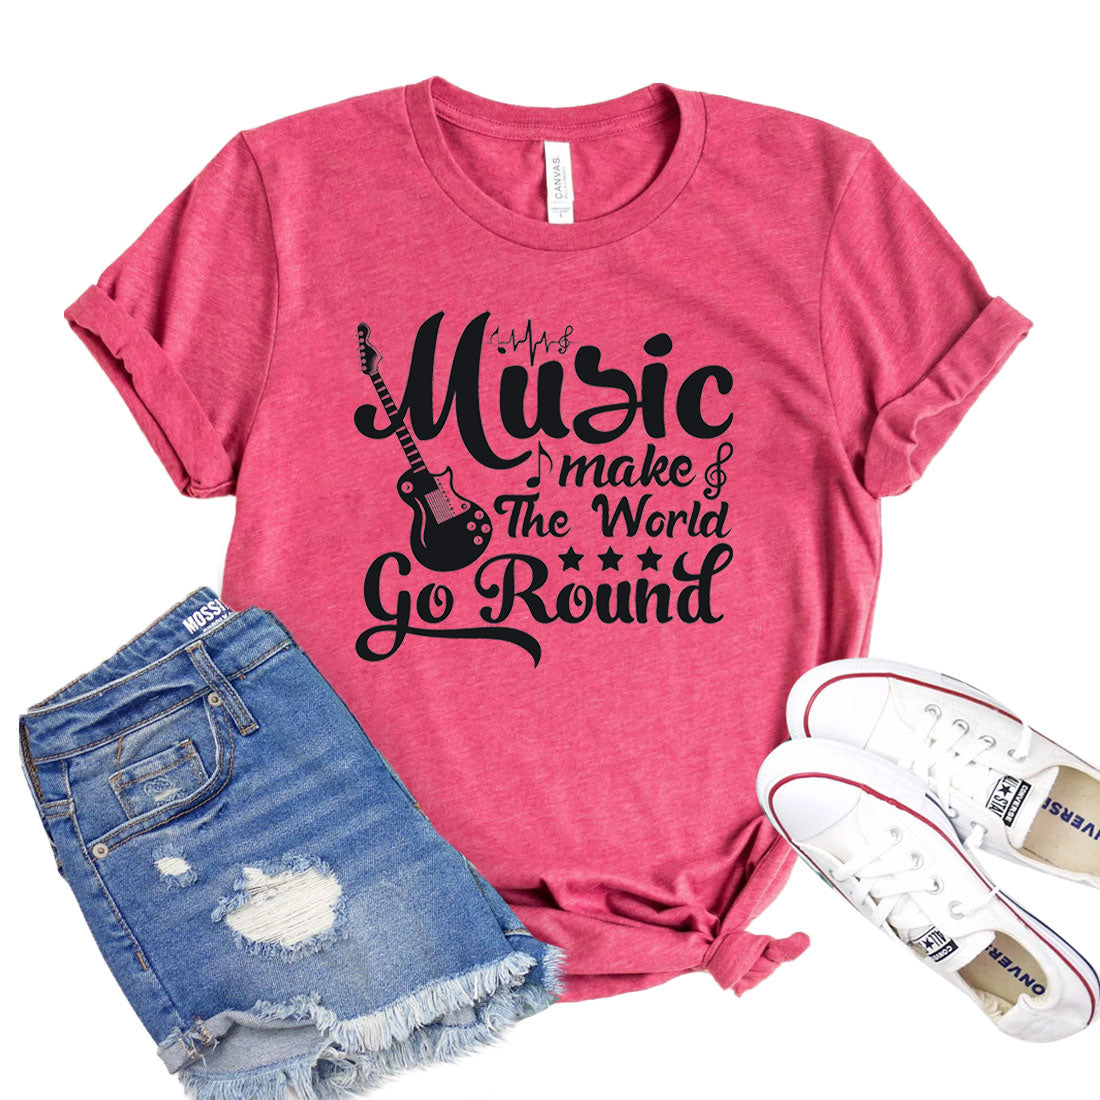 Music Makes The World Go Round Shirt Angelwarriorfitness.com